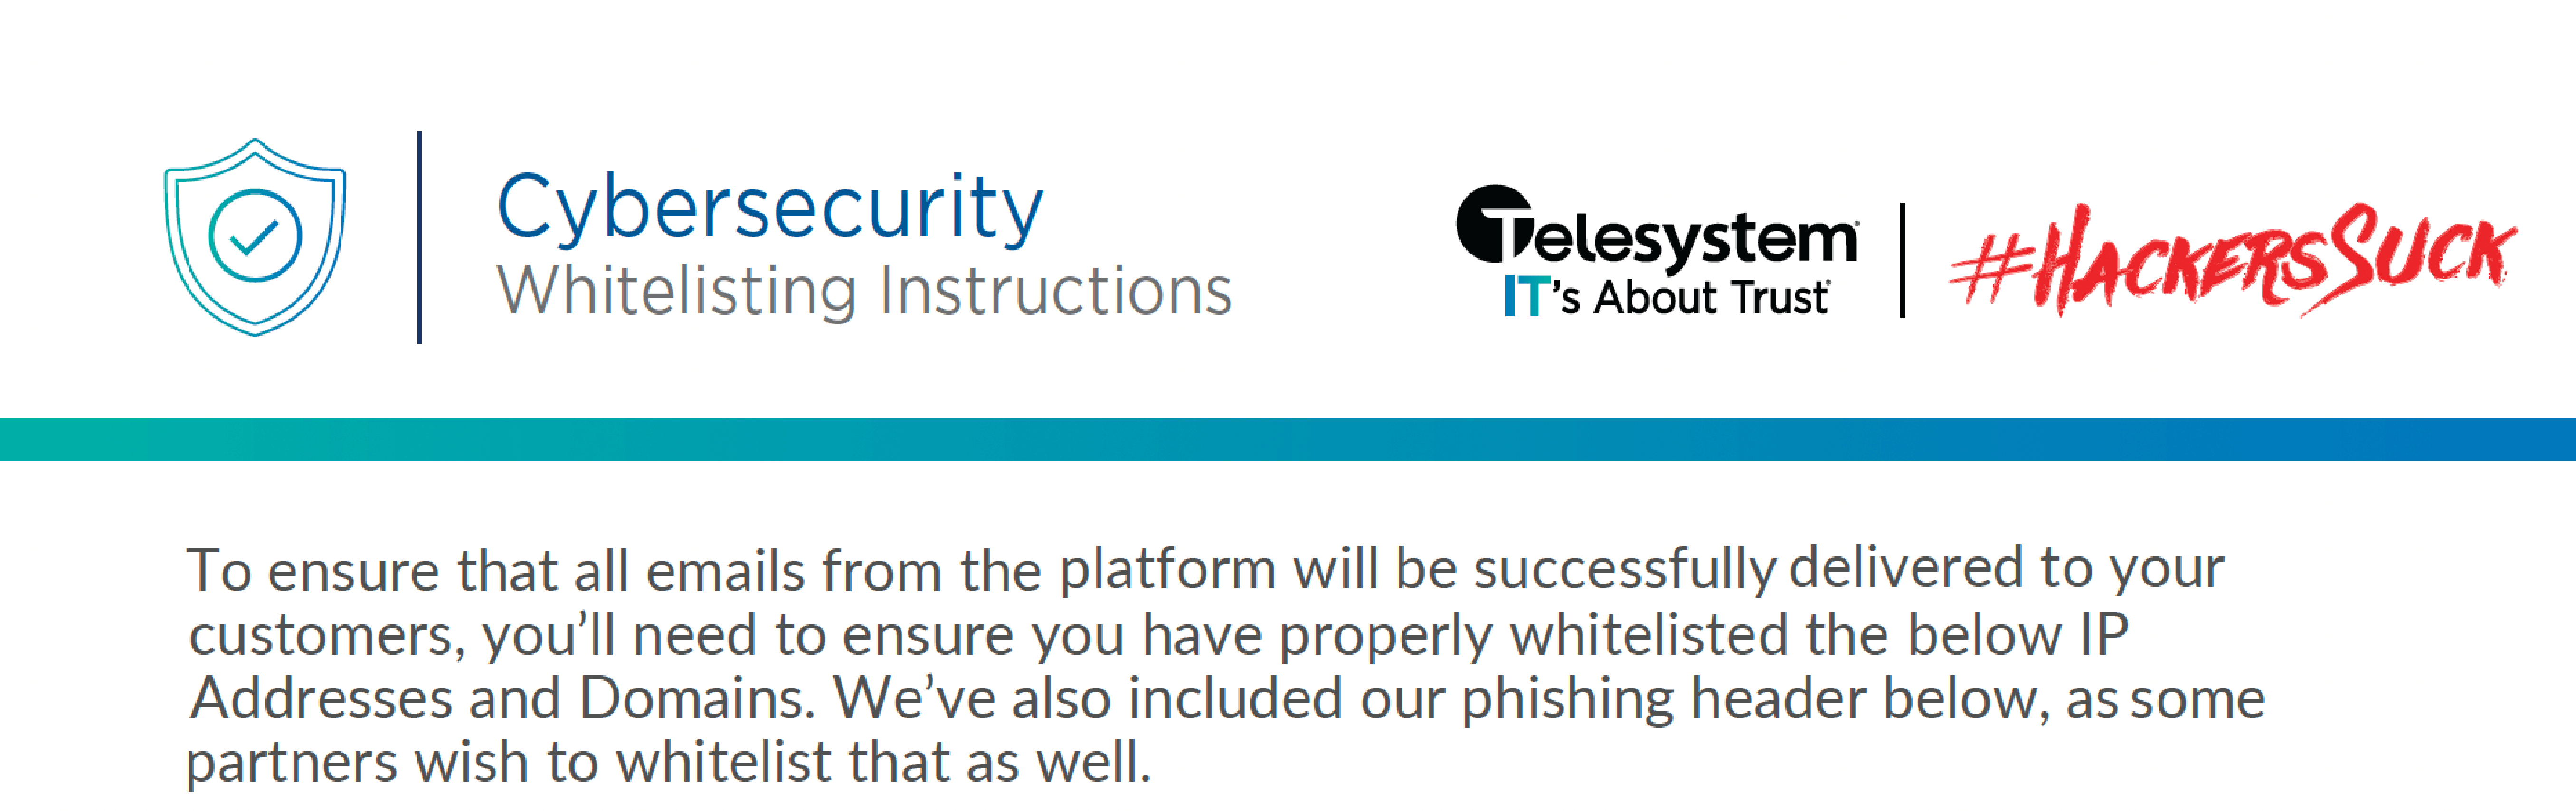 Telesystem Cybersecurity_Whitelisting Instructions Thumbnail